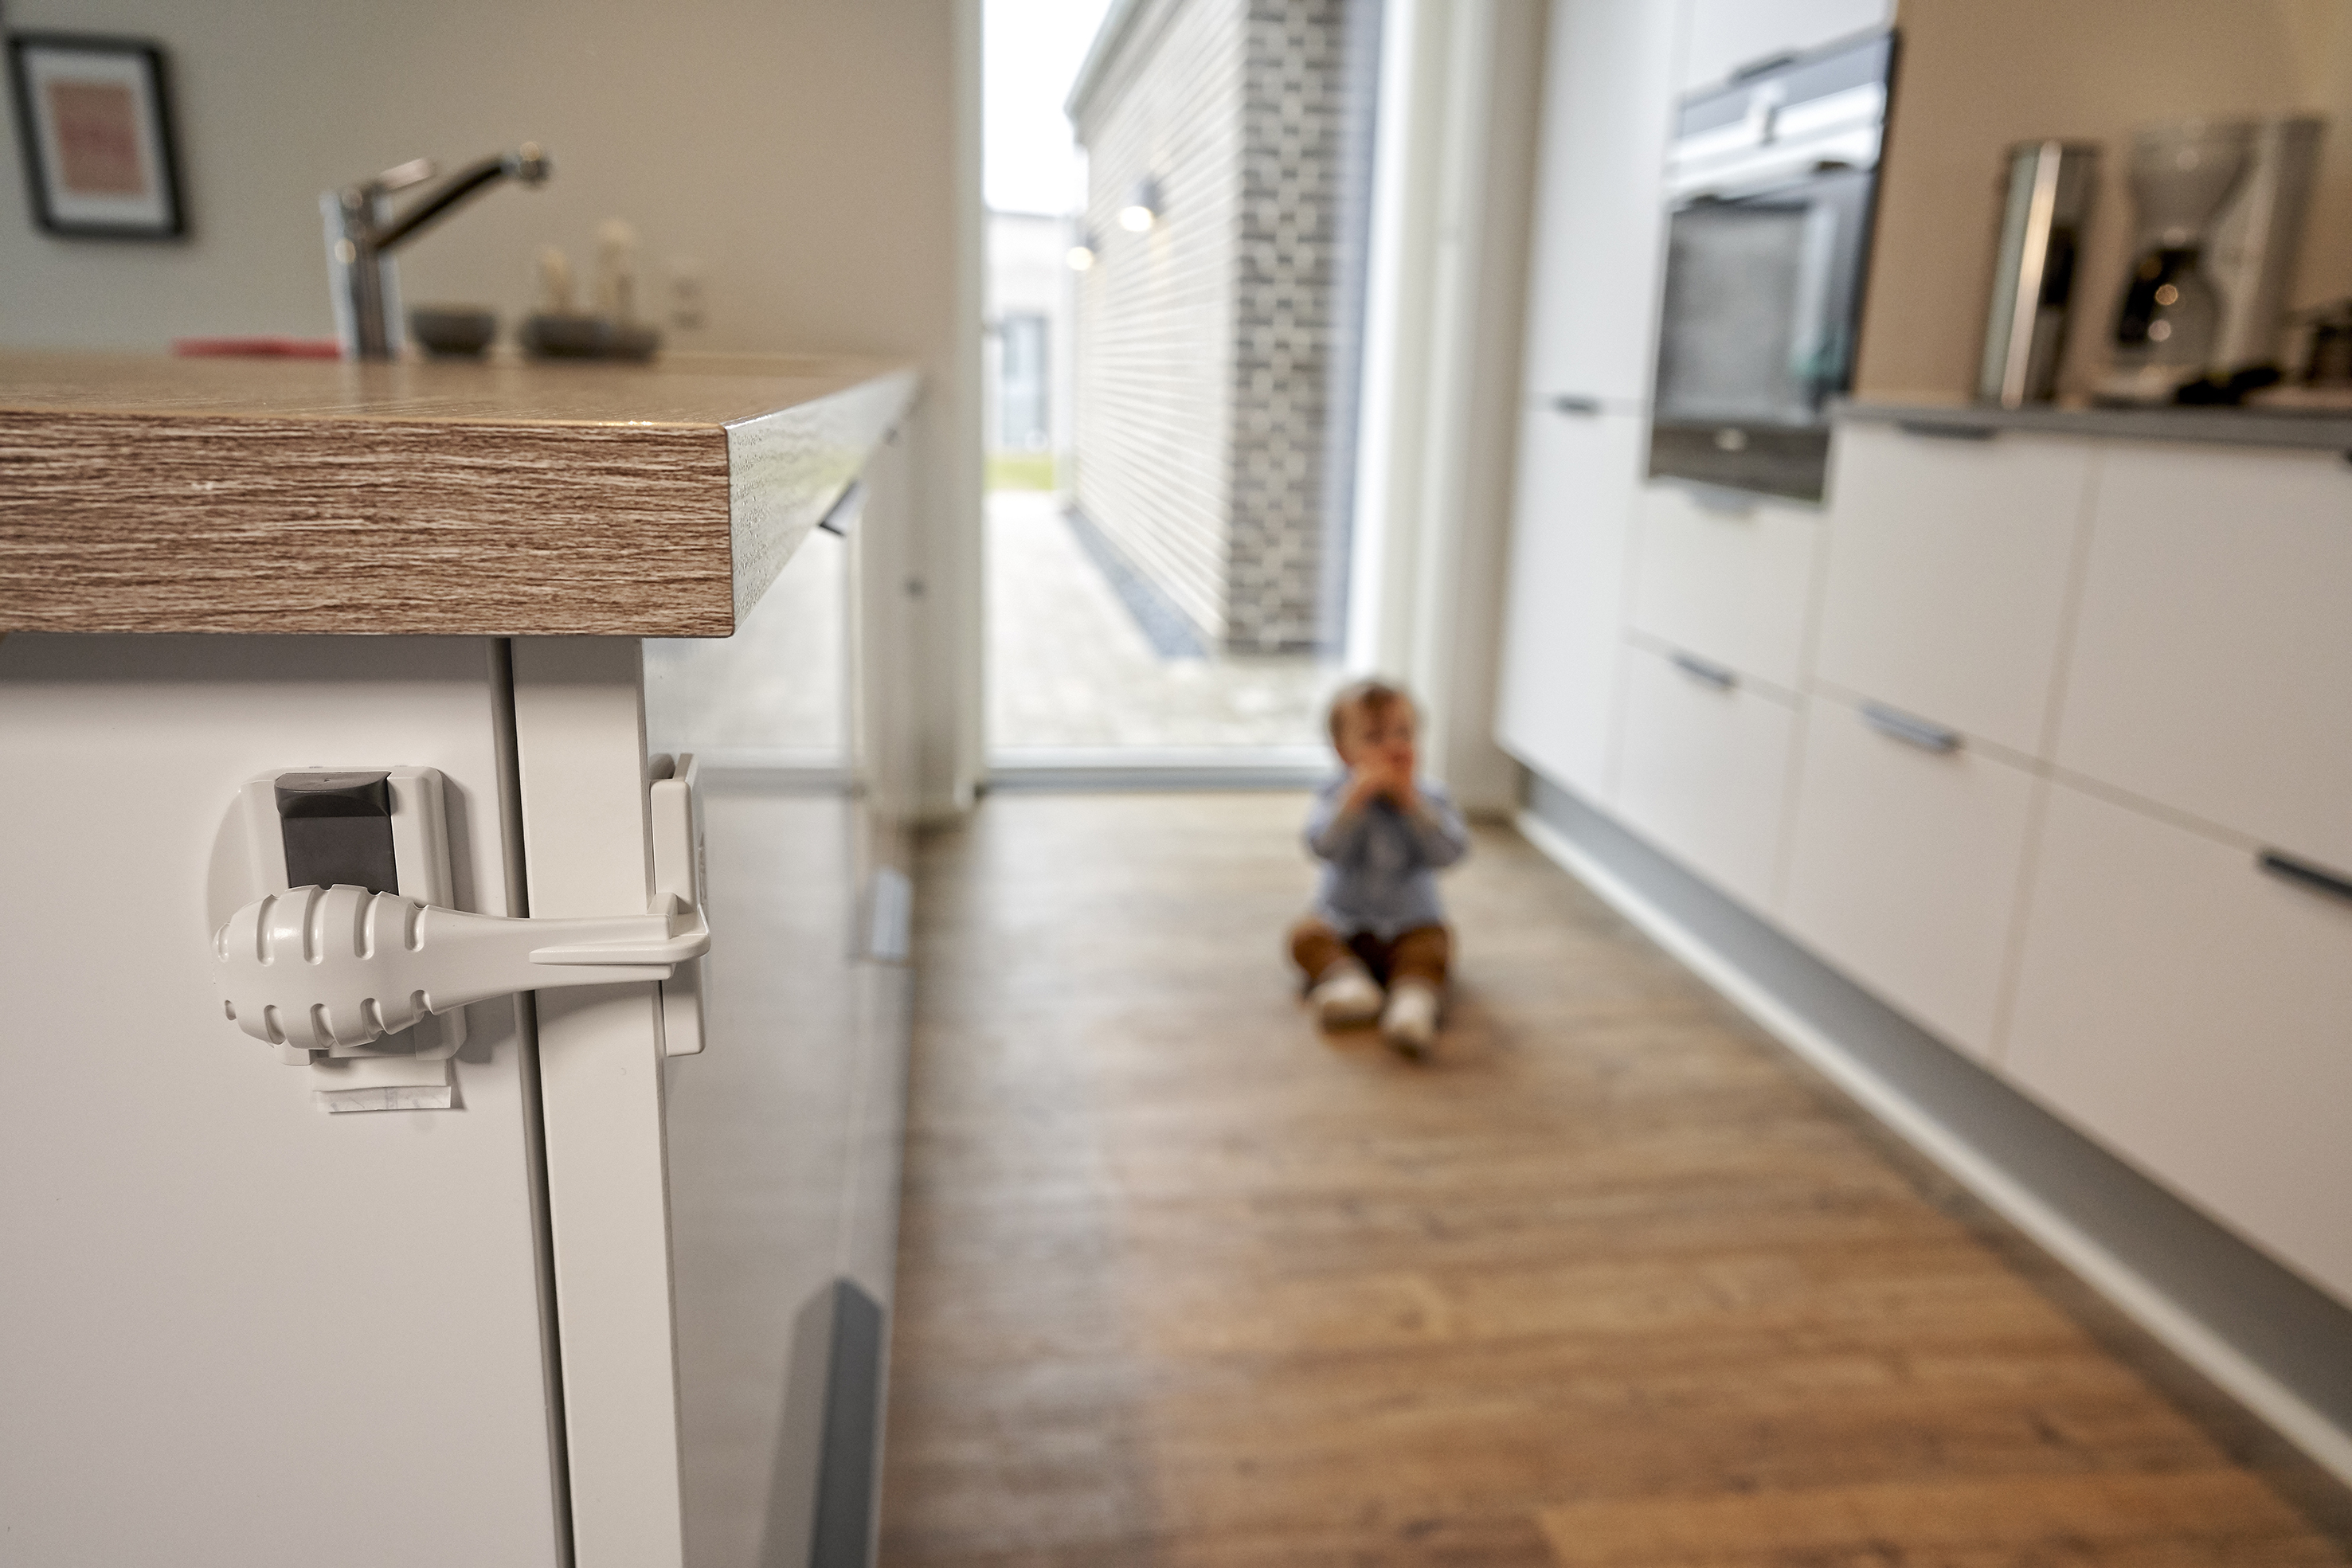 BabyDan Child Kitchen Safety Cabinet and Fridge Lock - How To Use